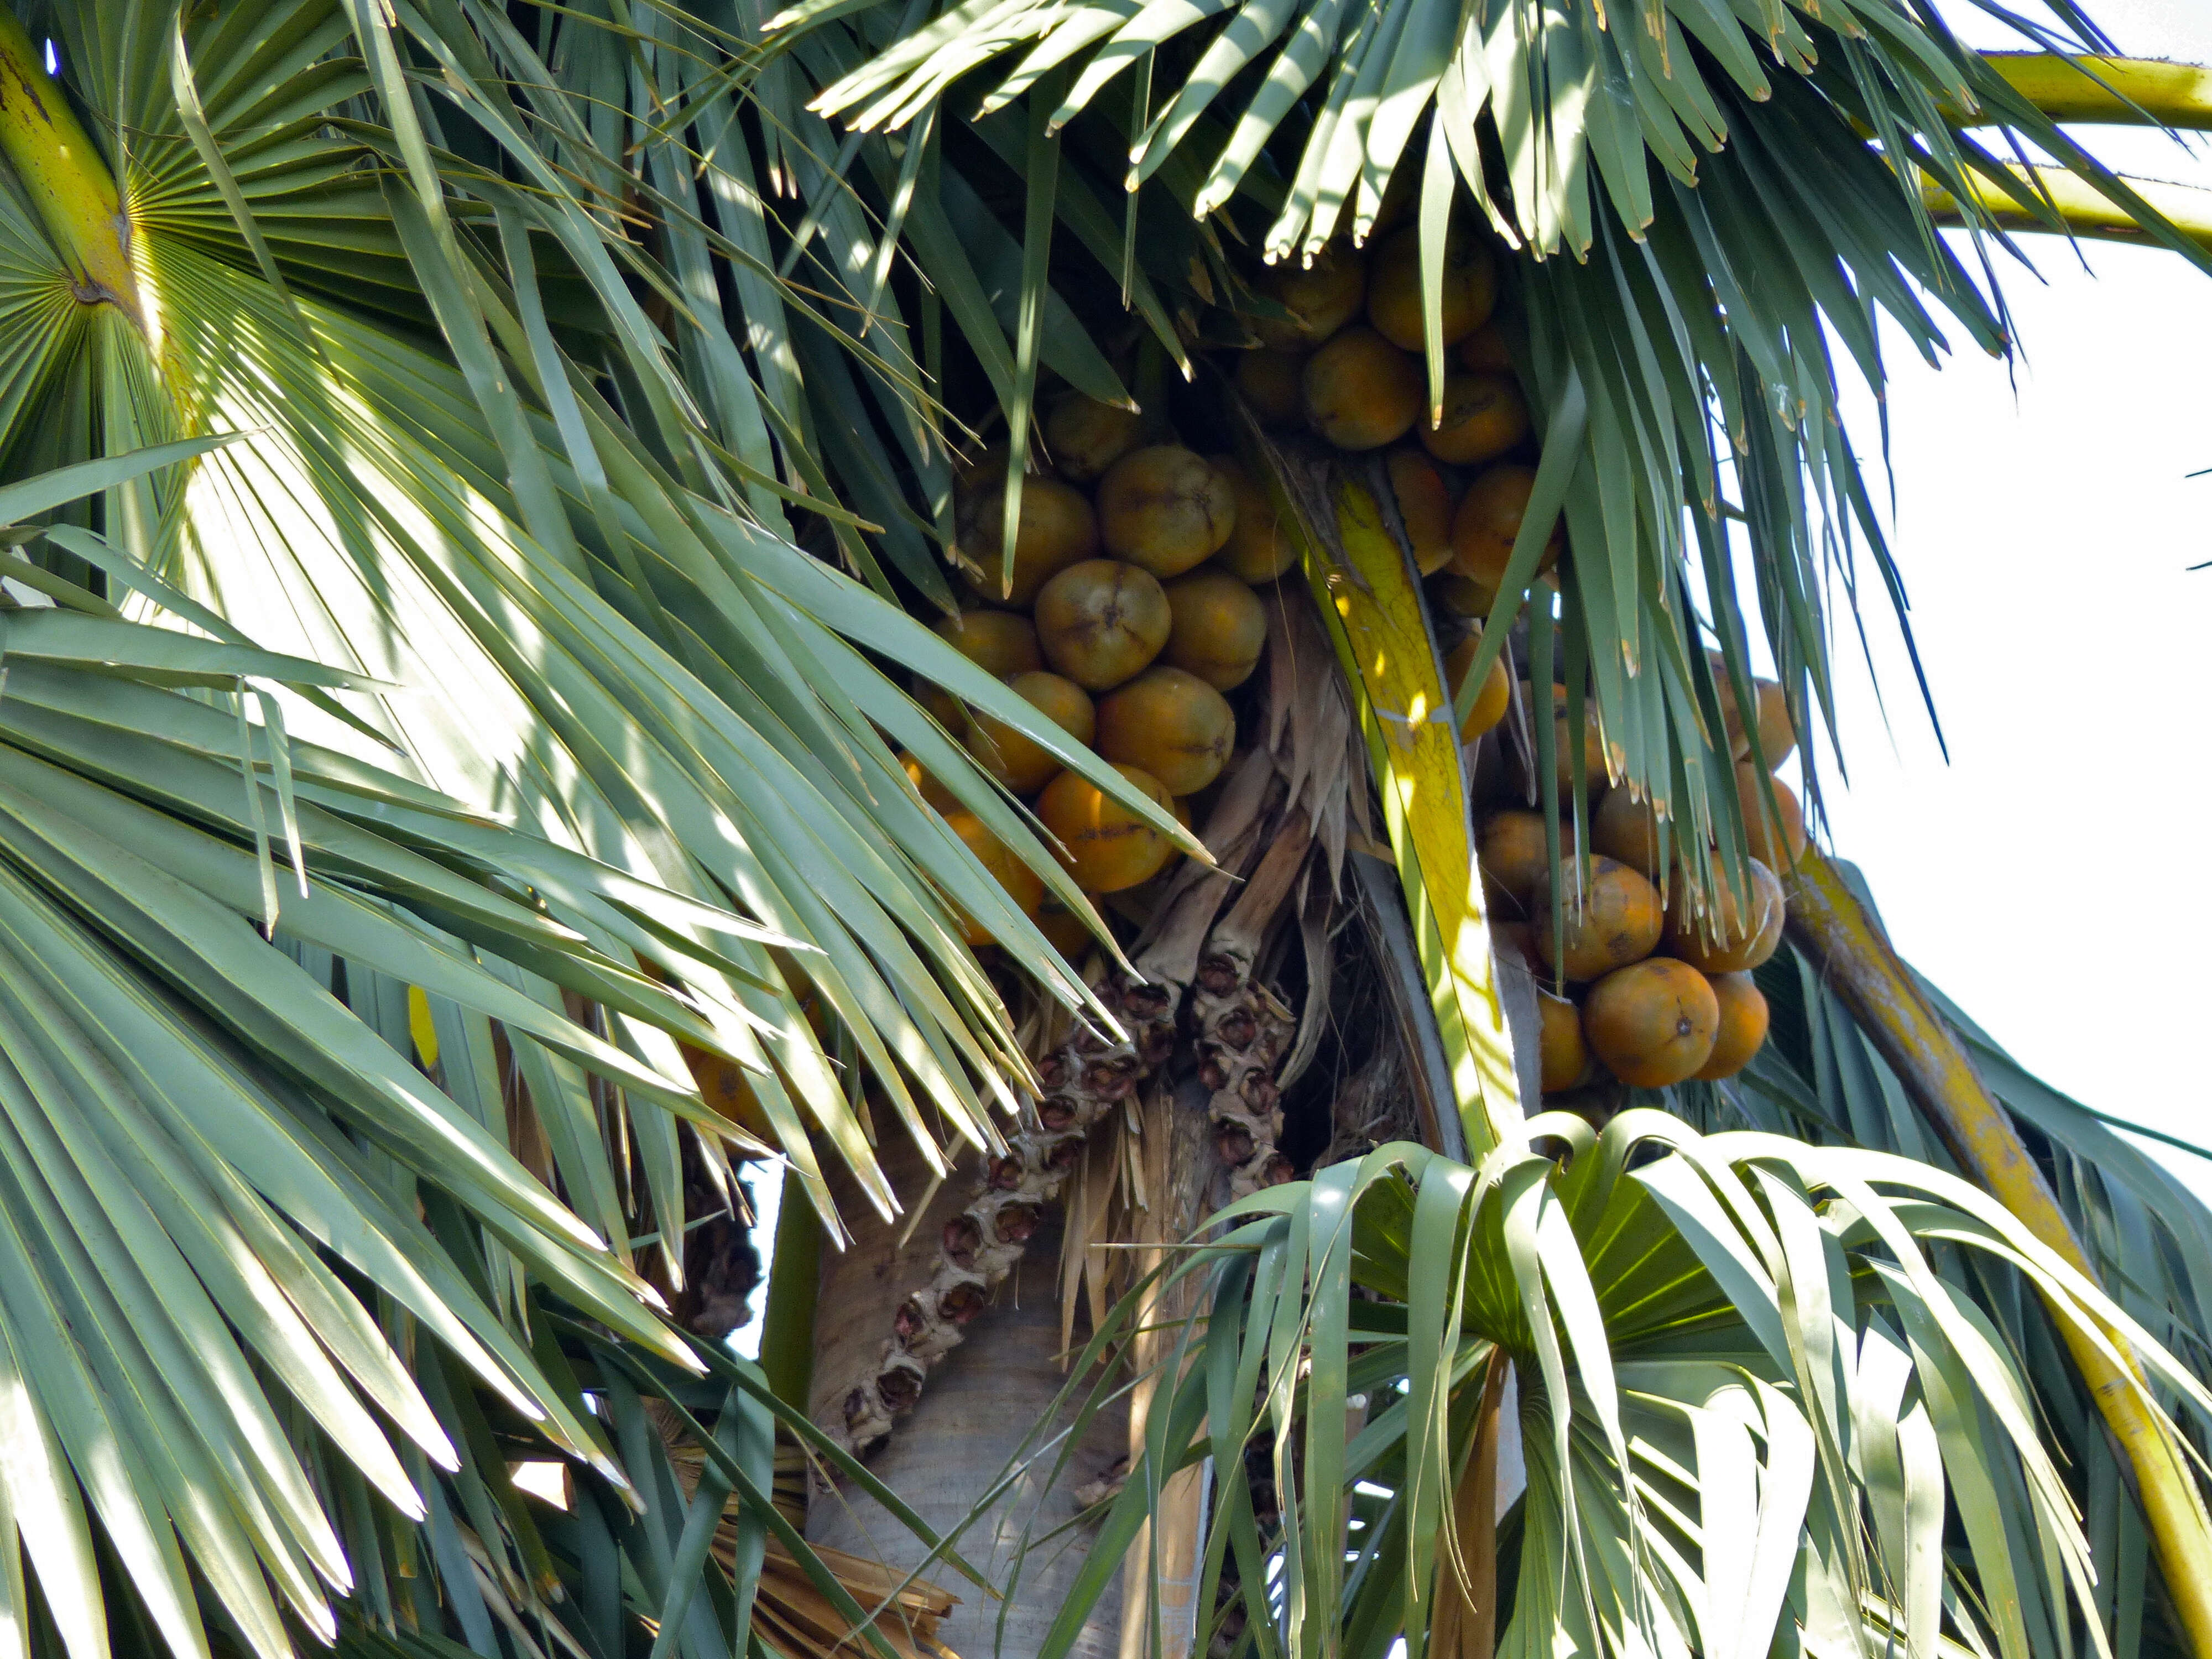 Image of borassus palm